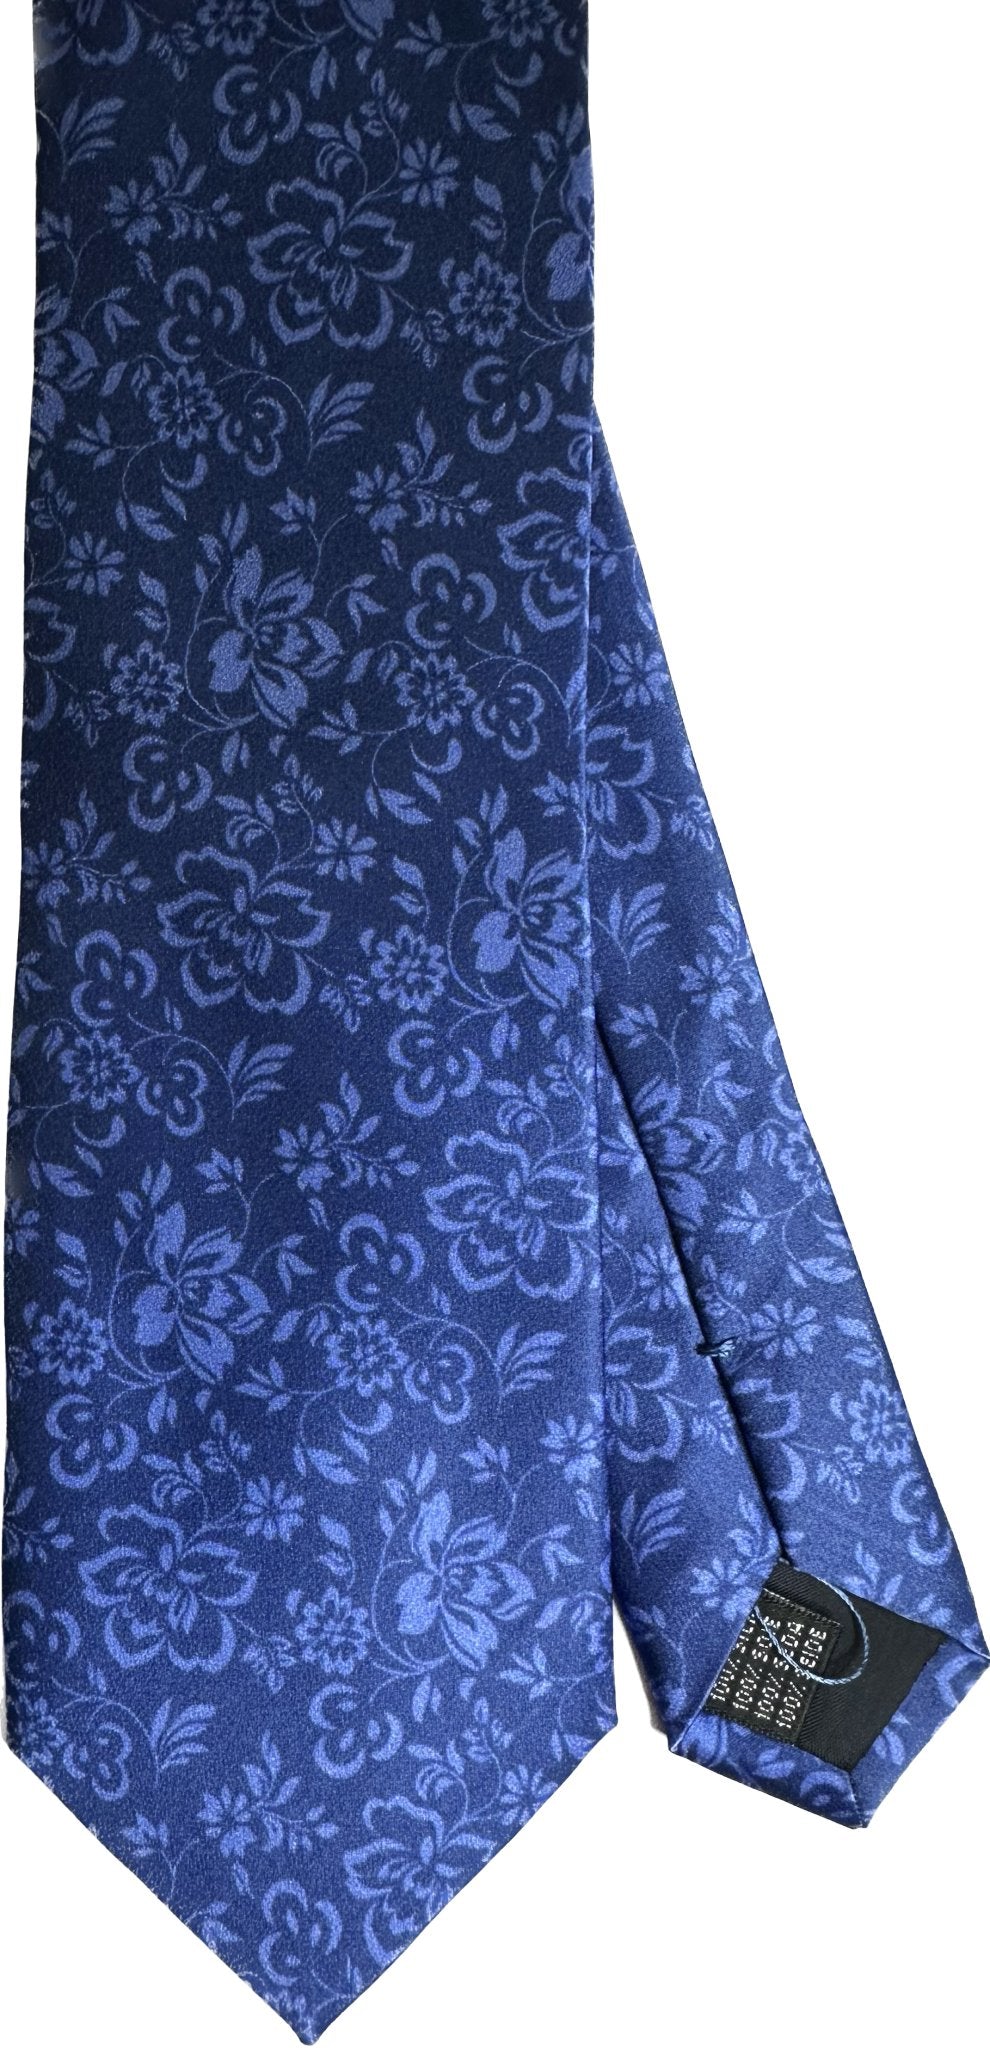 Cravatta seta fantasia fiori cobalto Monsieur - MONSIEUR